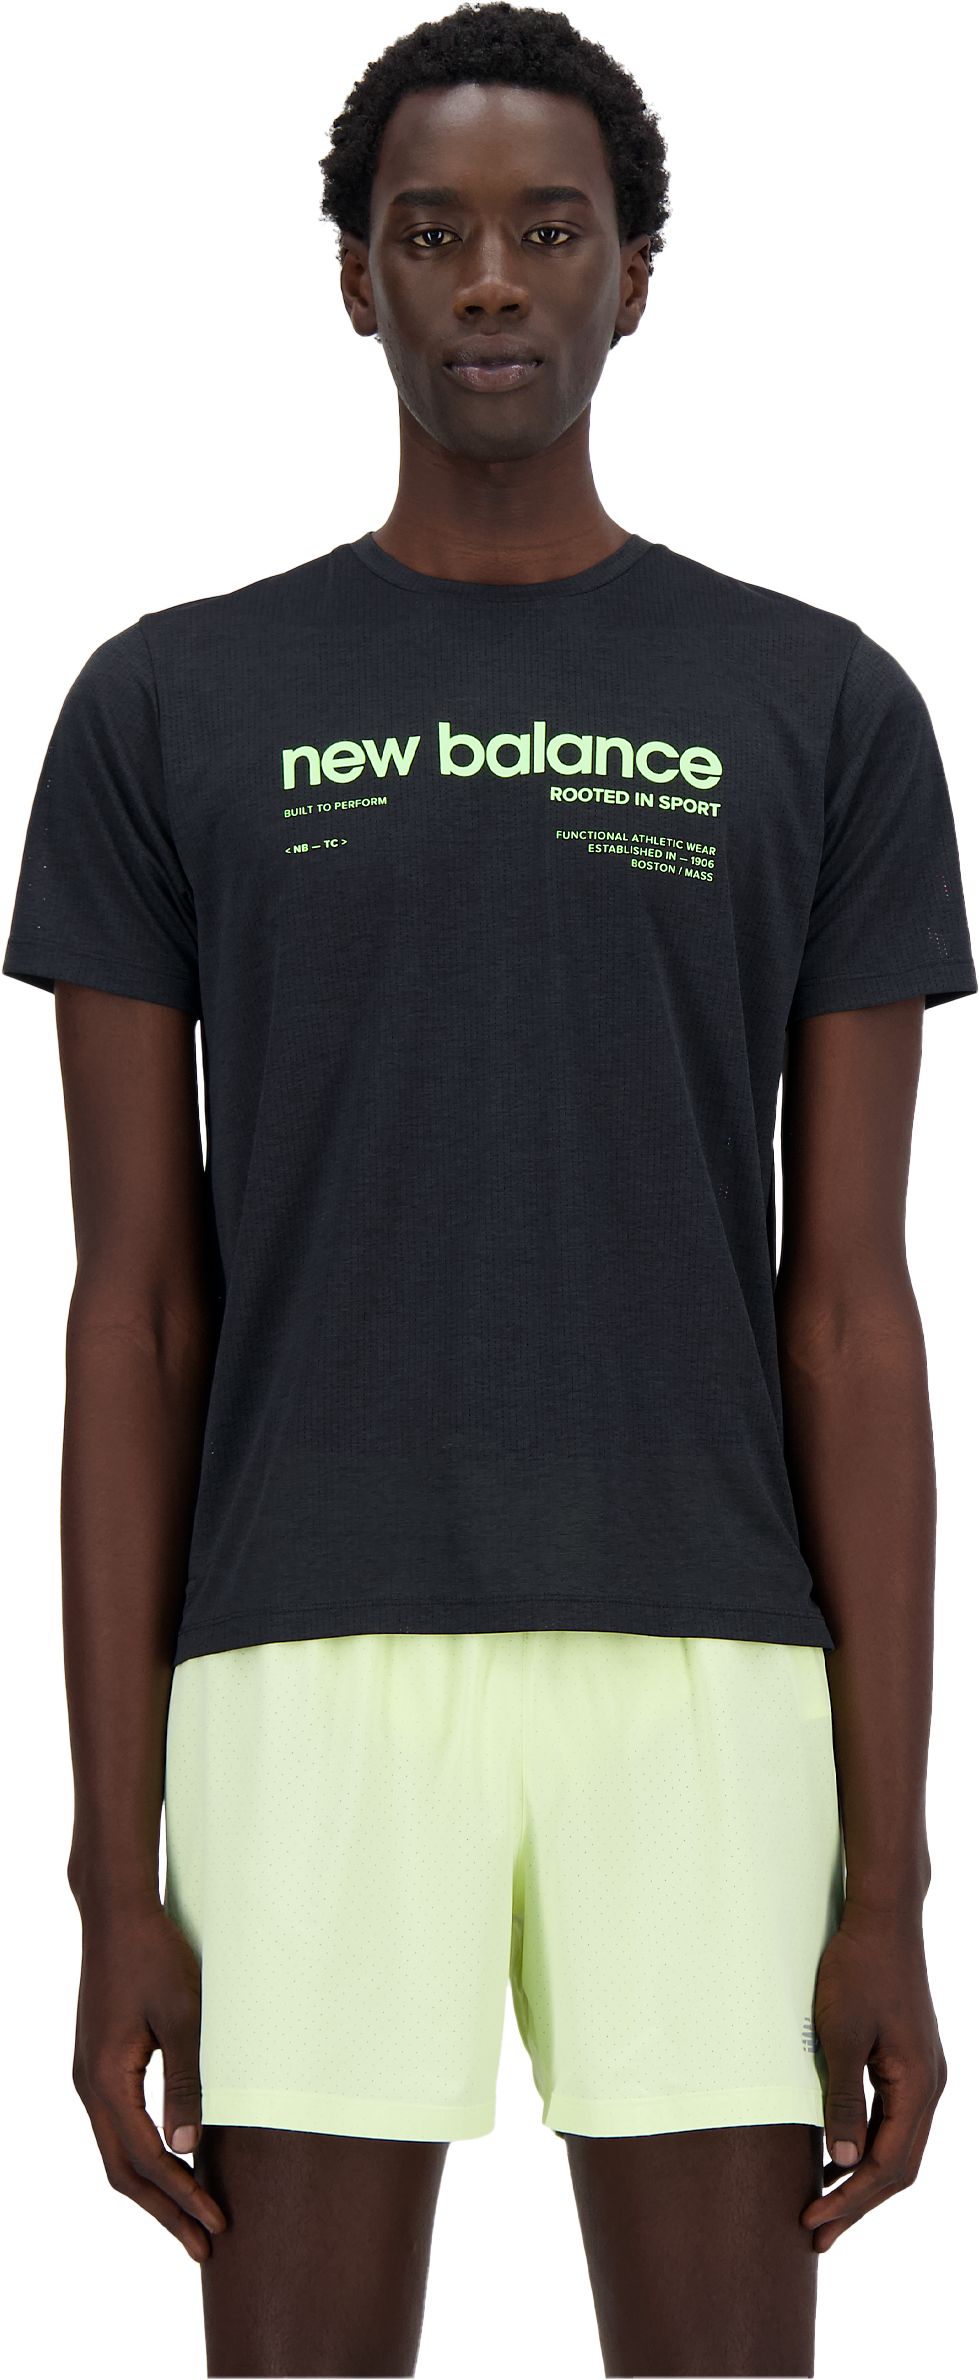 NEW BALANCE, Athletics Printed Run T-Shirt